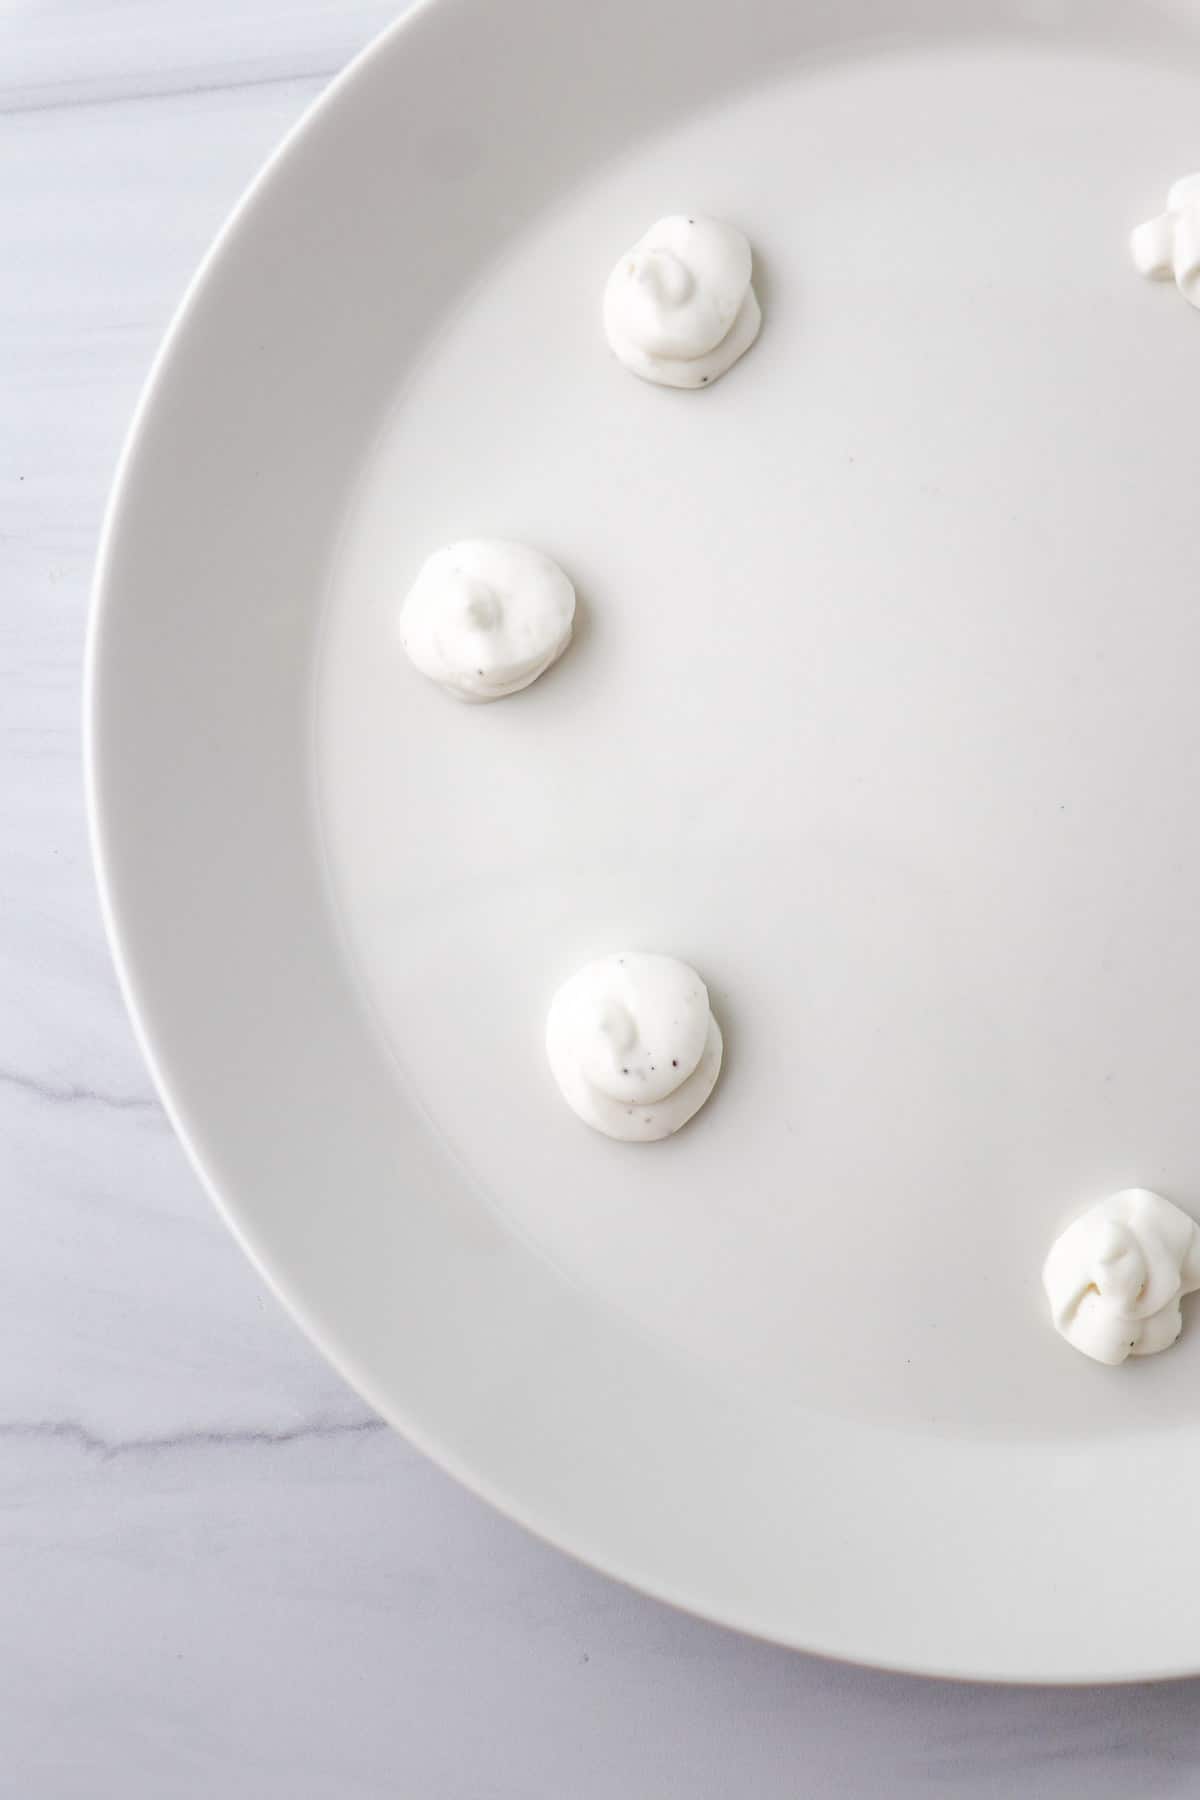 Dollops of Horseradish Yogurt Sauce in a circle on a white plate.